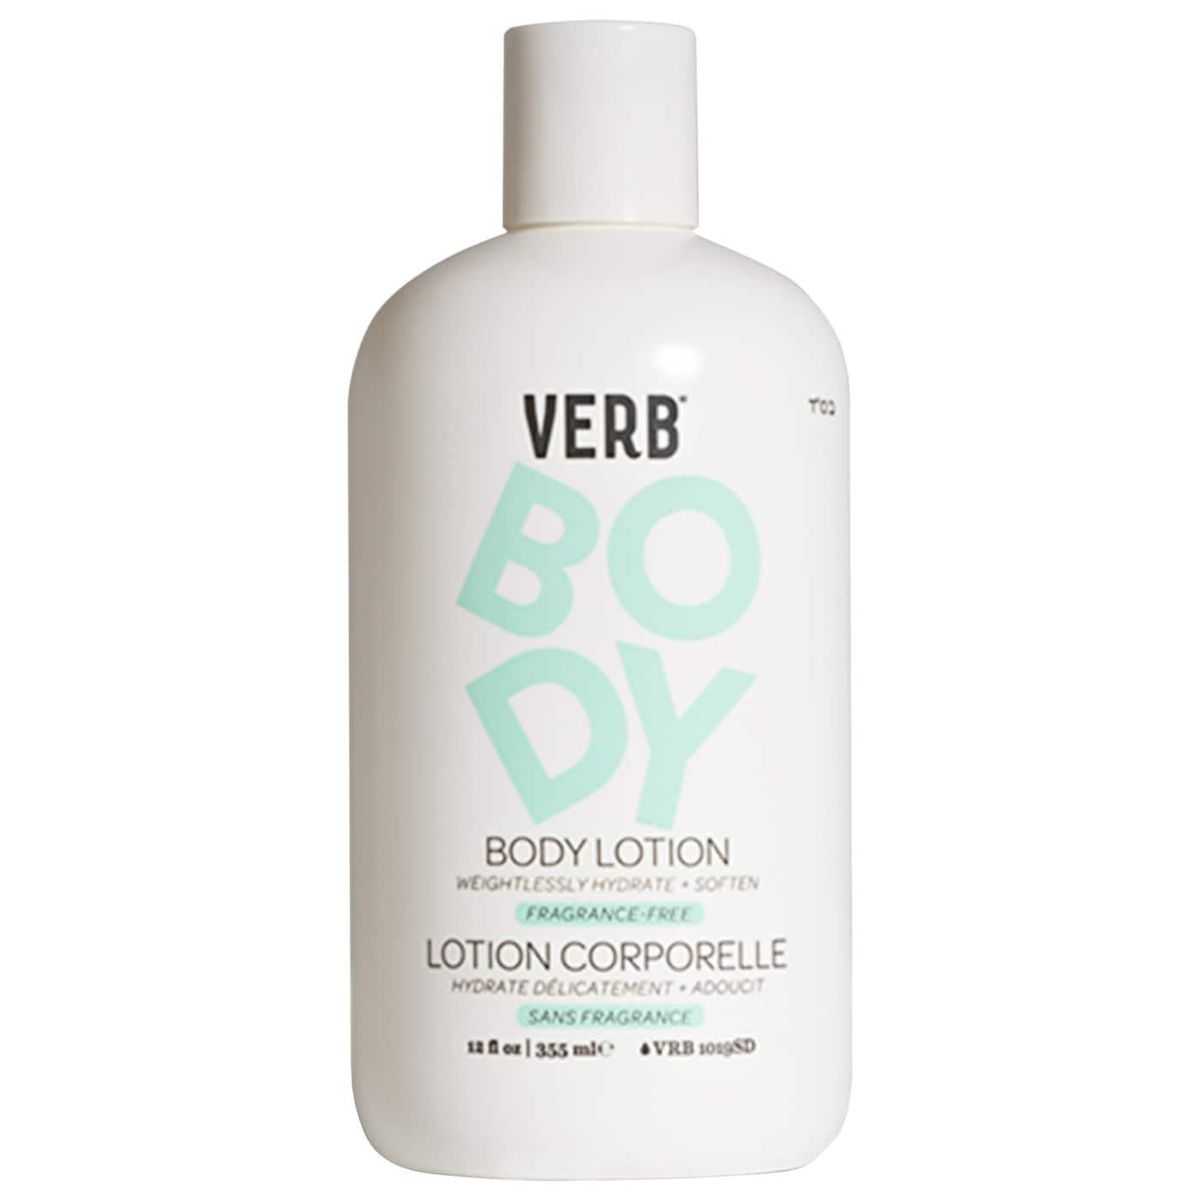 verb body lotion